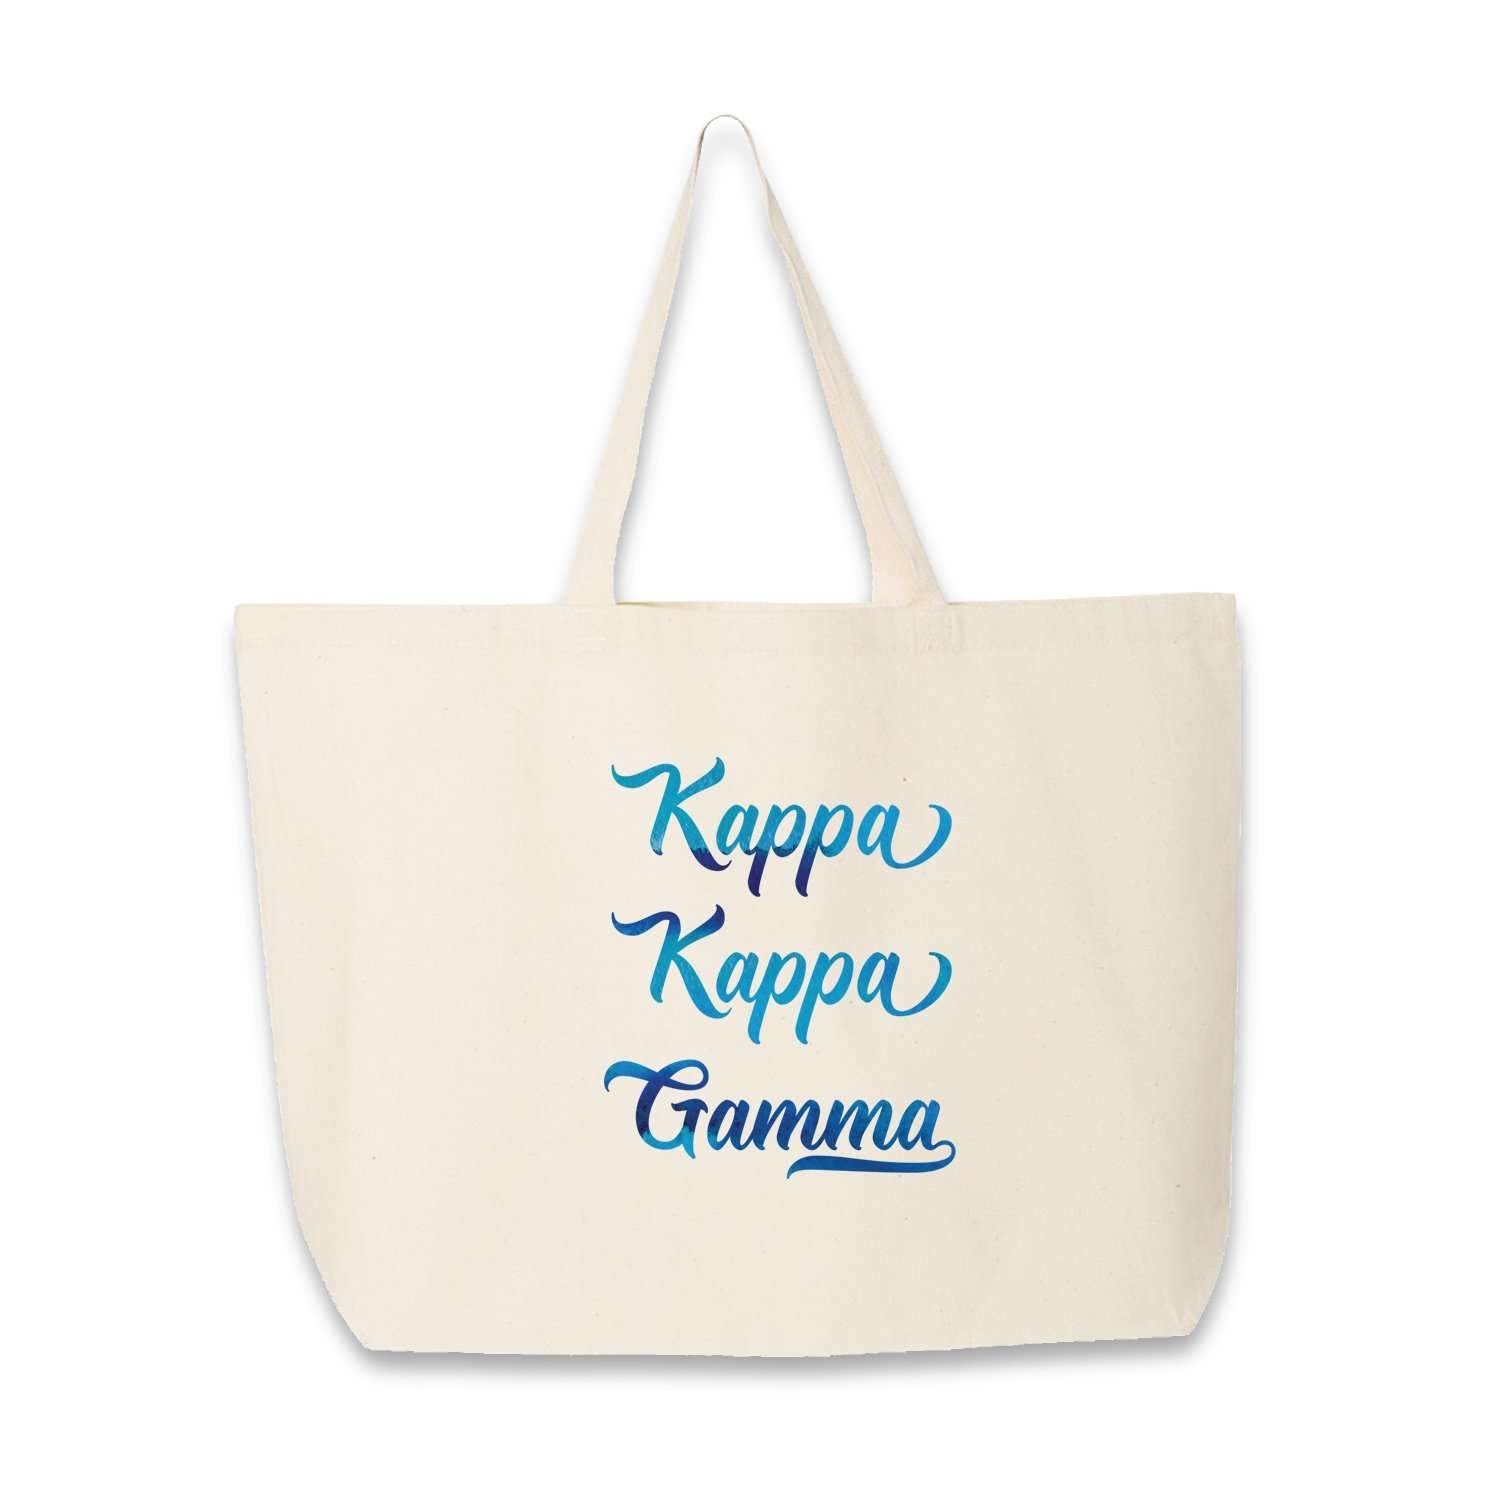 Kappa Kappa Gamma sorority name custom printed on canvas tote bag